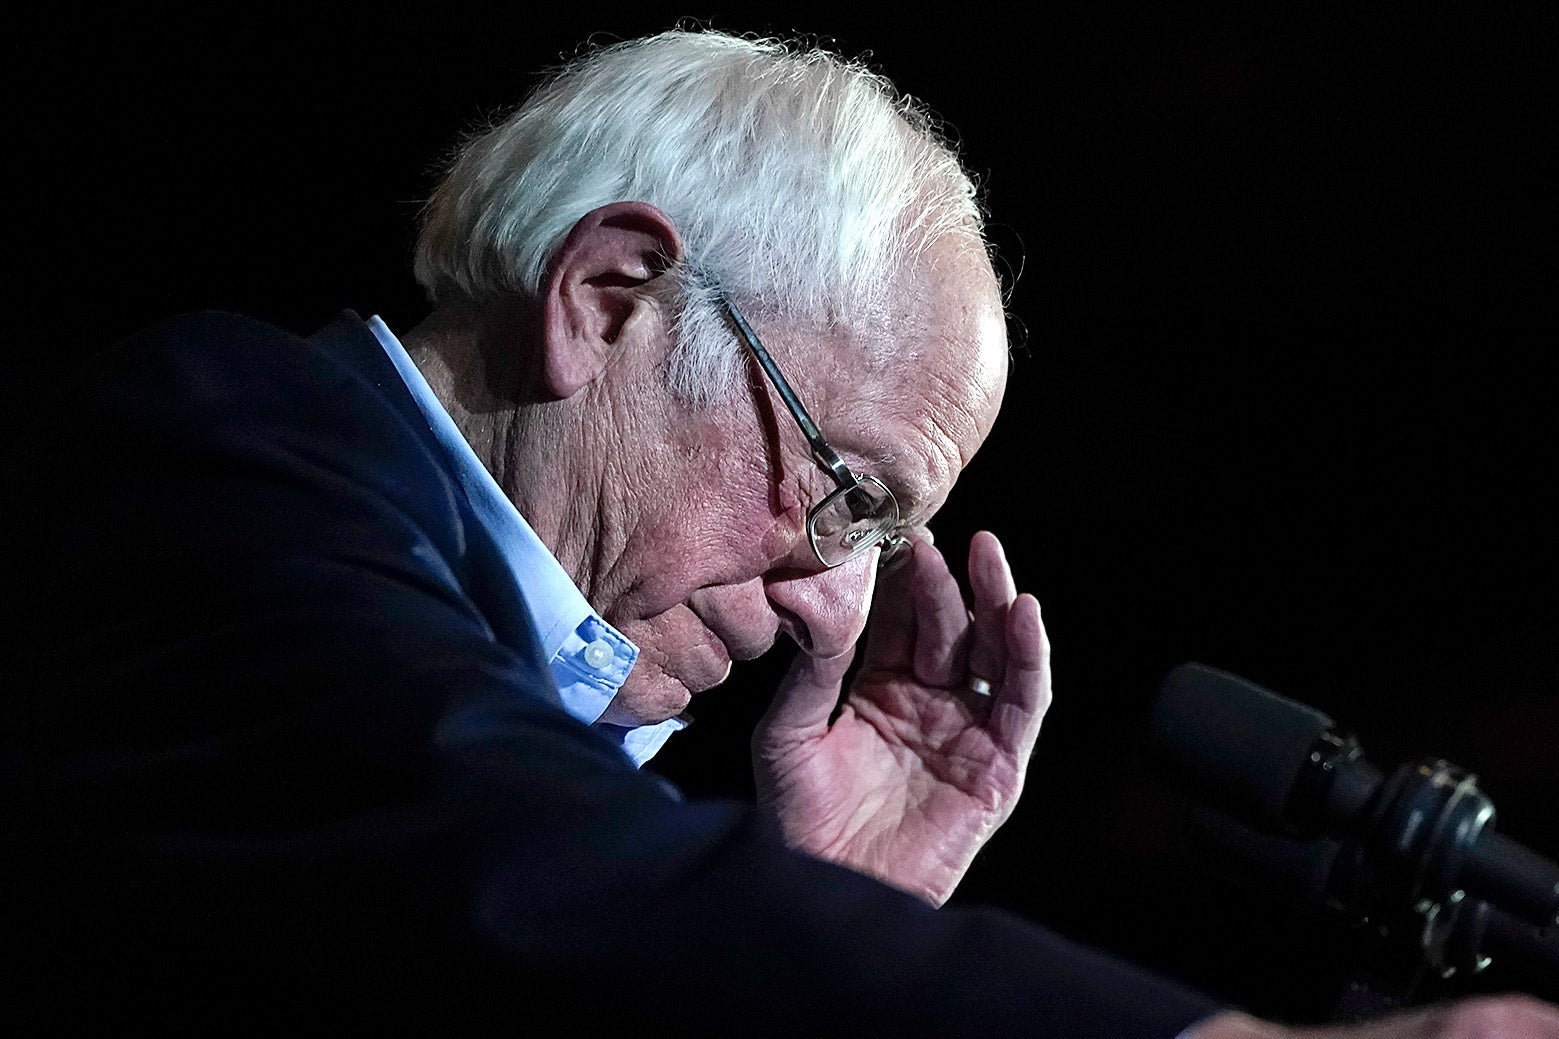 Bernie Sanders, viewed in profile, adjusts his glasses while standing behind a microphone.